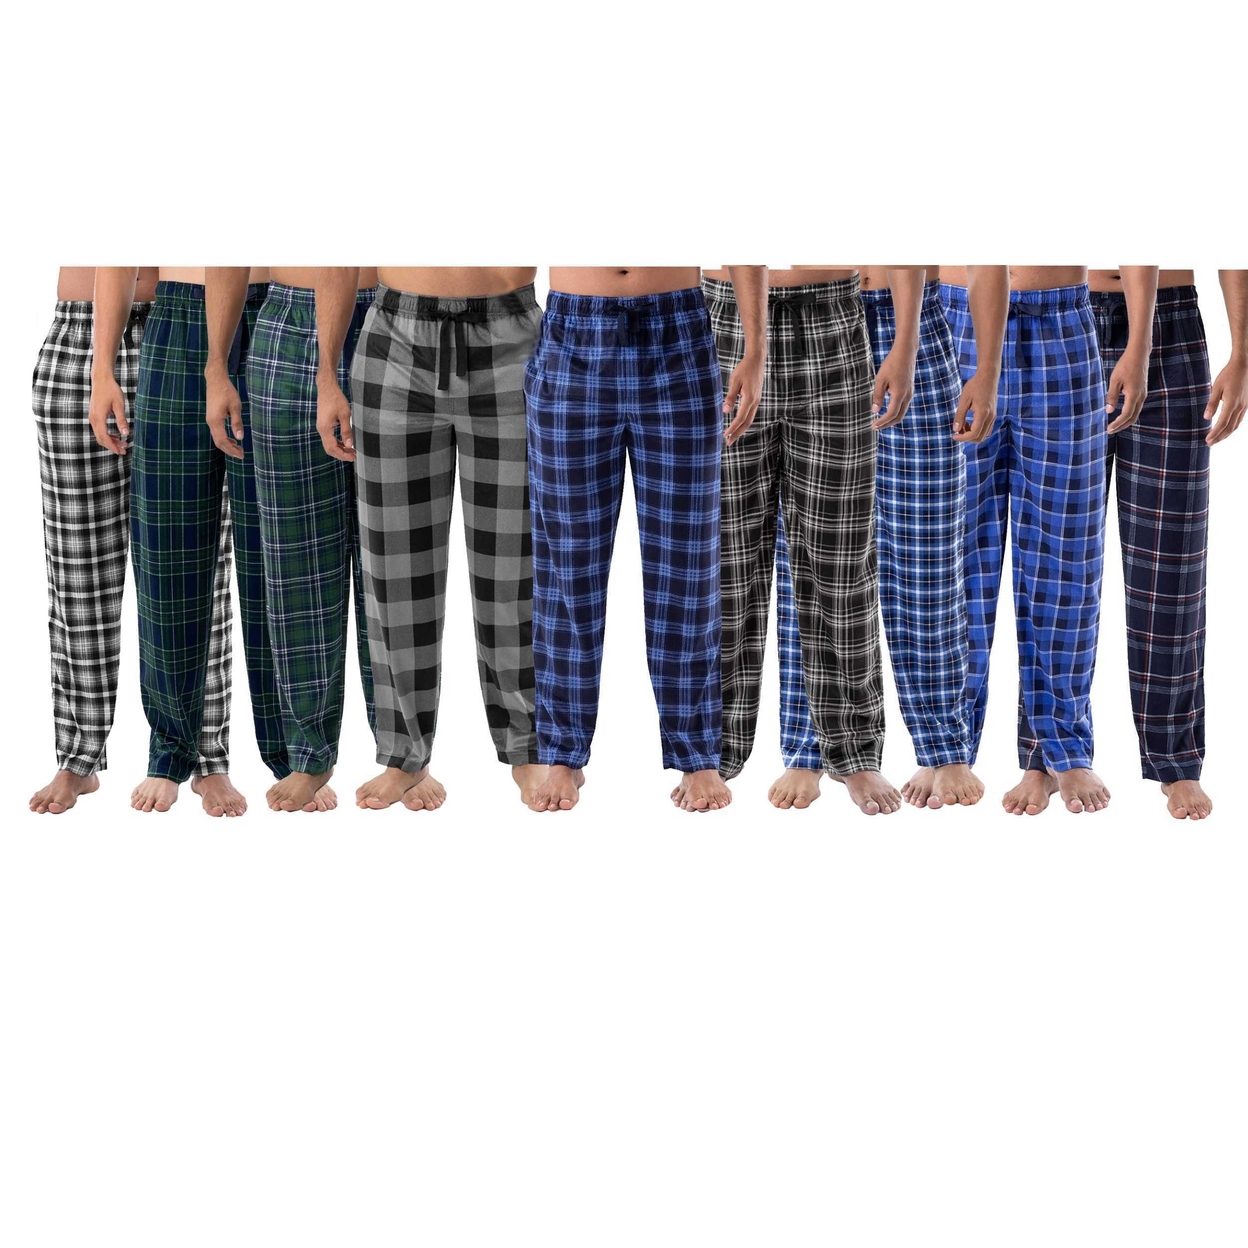 4-Pack: Men's Ultra-Soft Cozy Lounge Sleep Micro Fleece Plaid Pajama Pants - Small